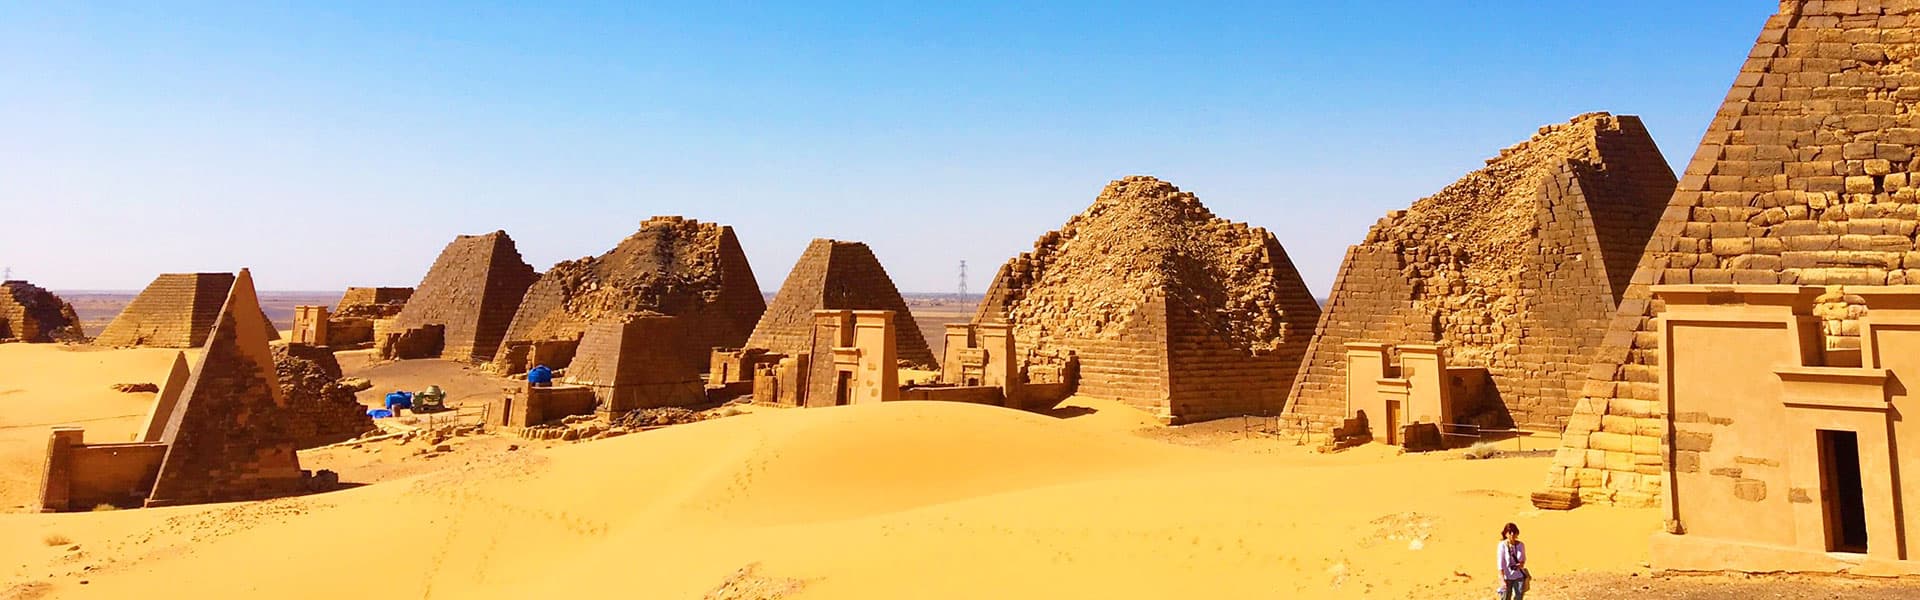 The Meroe Pyramids, Sudan